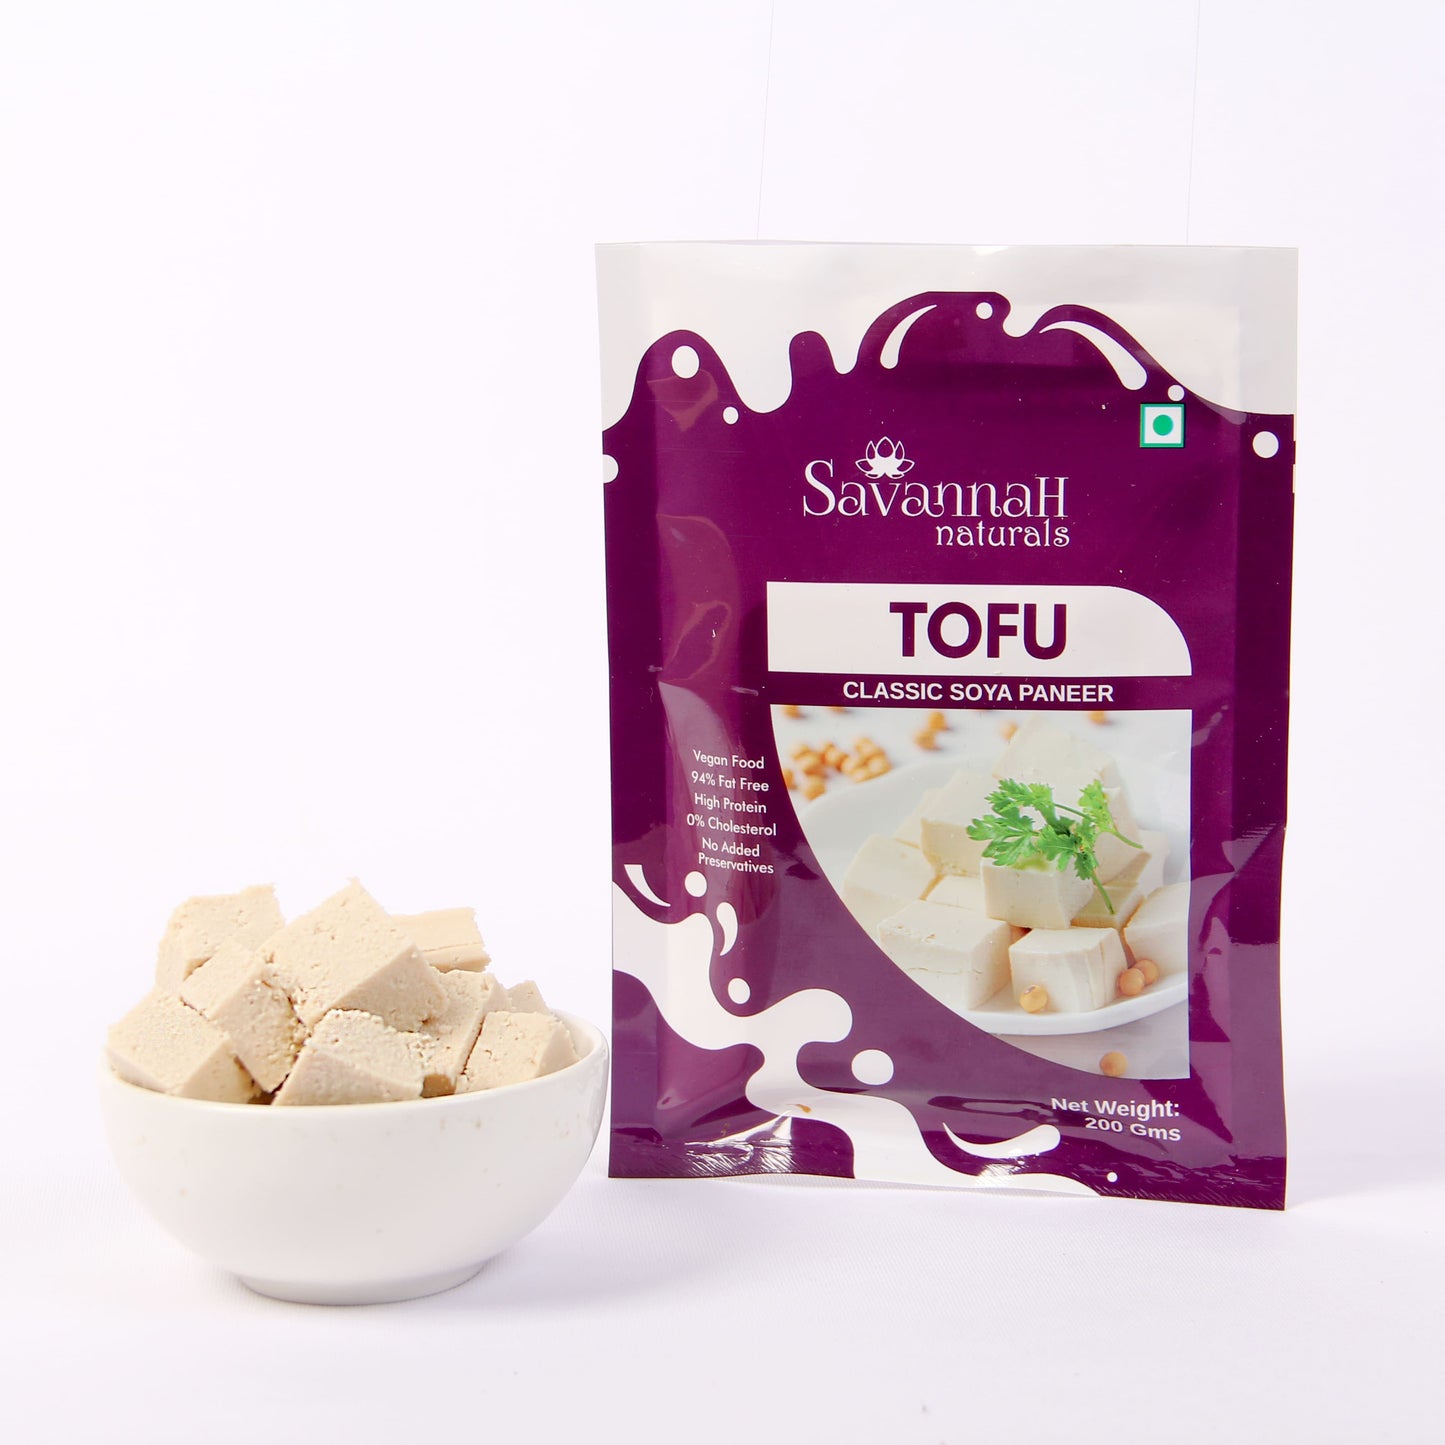 Savannah Naturals Classic Tofu, 200gm